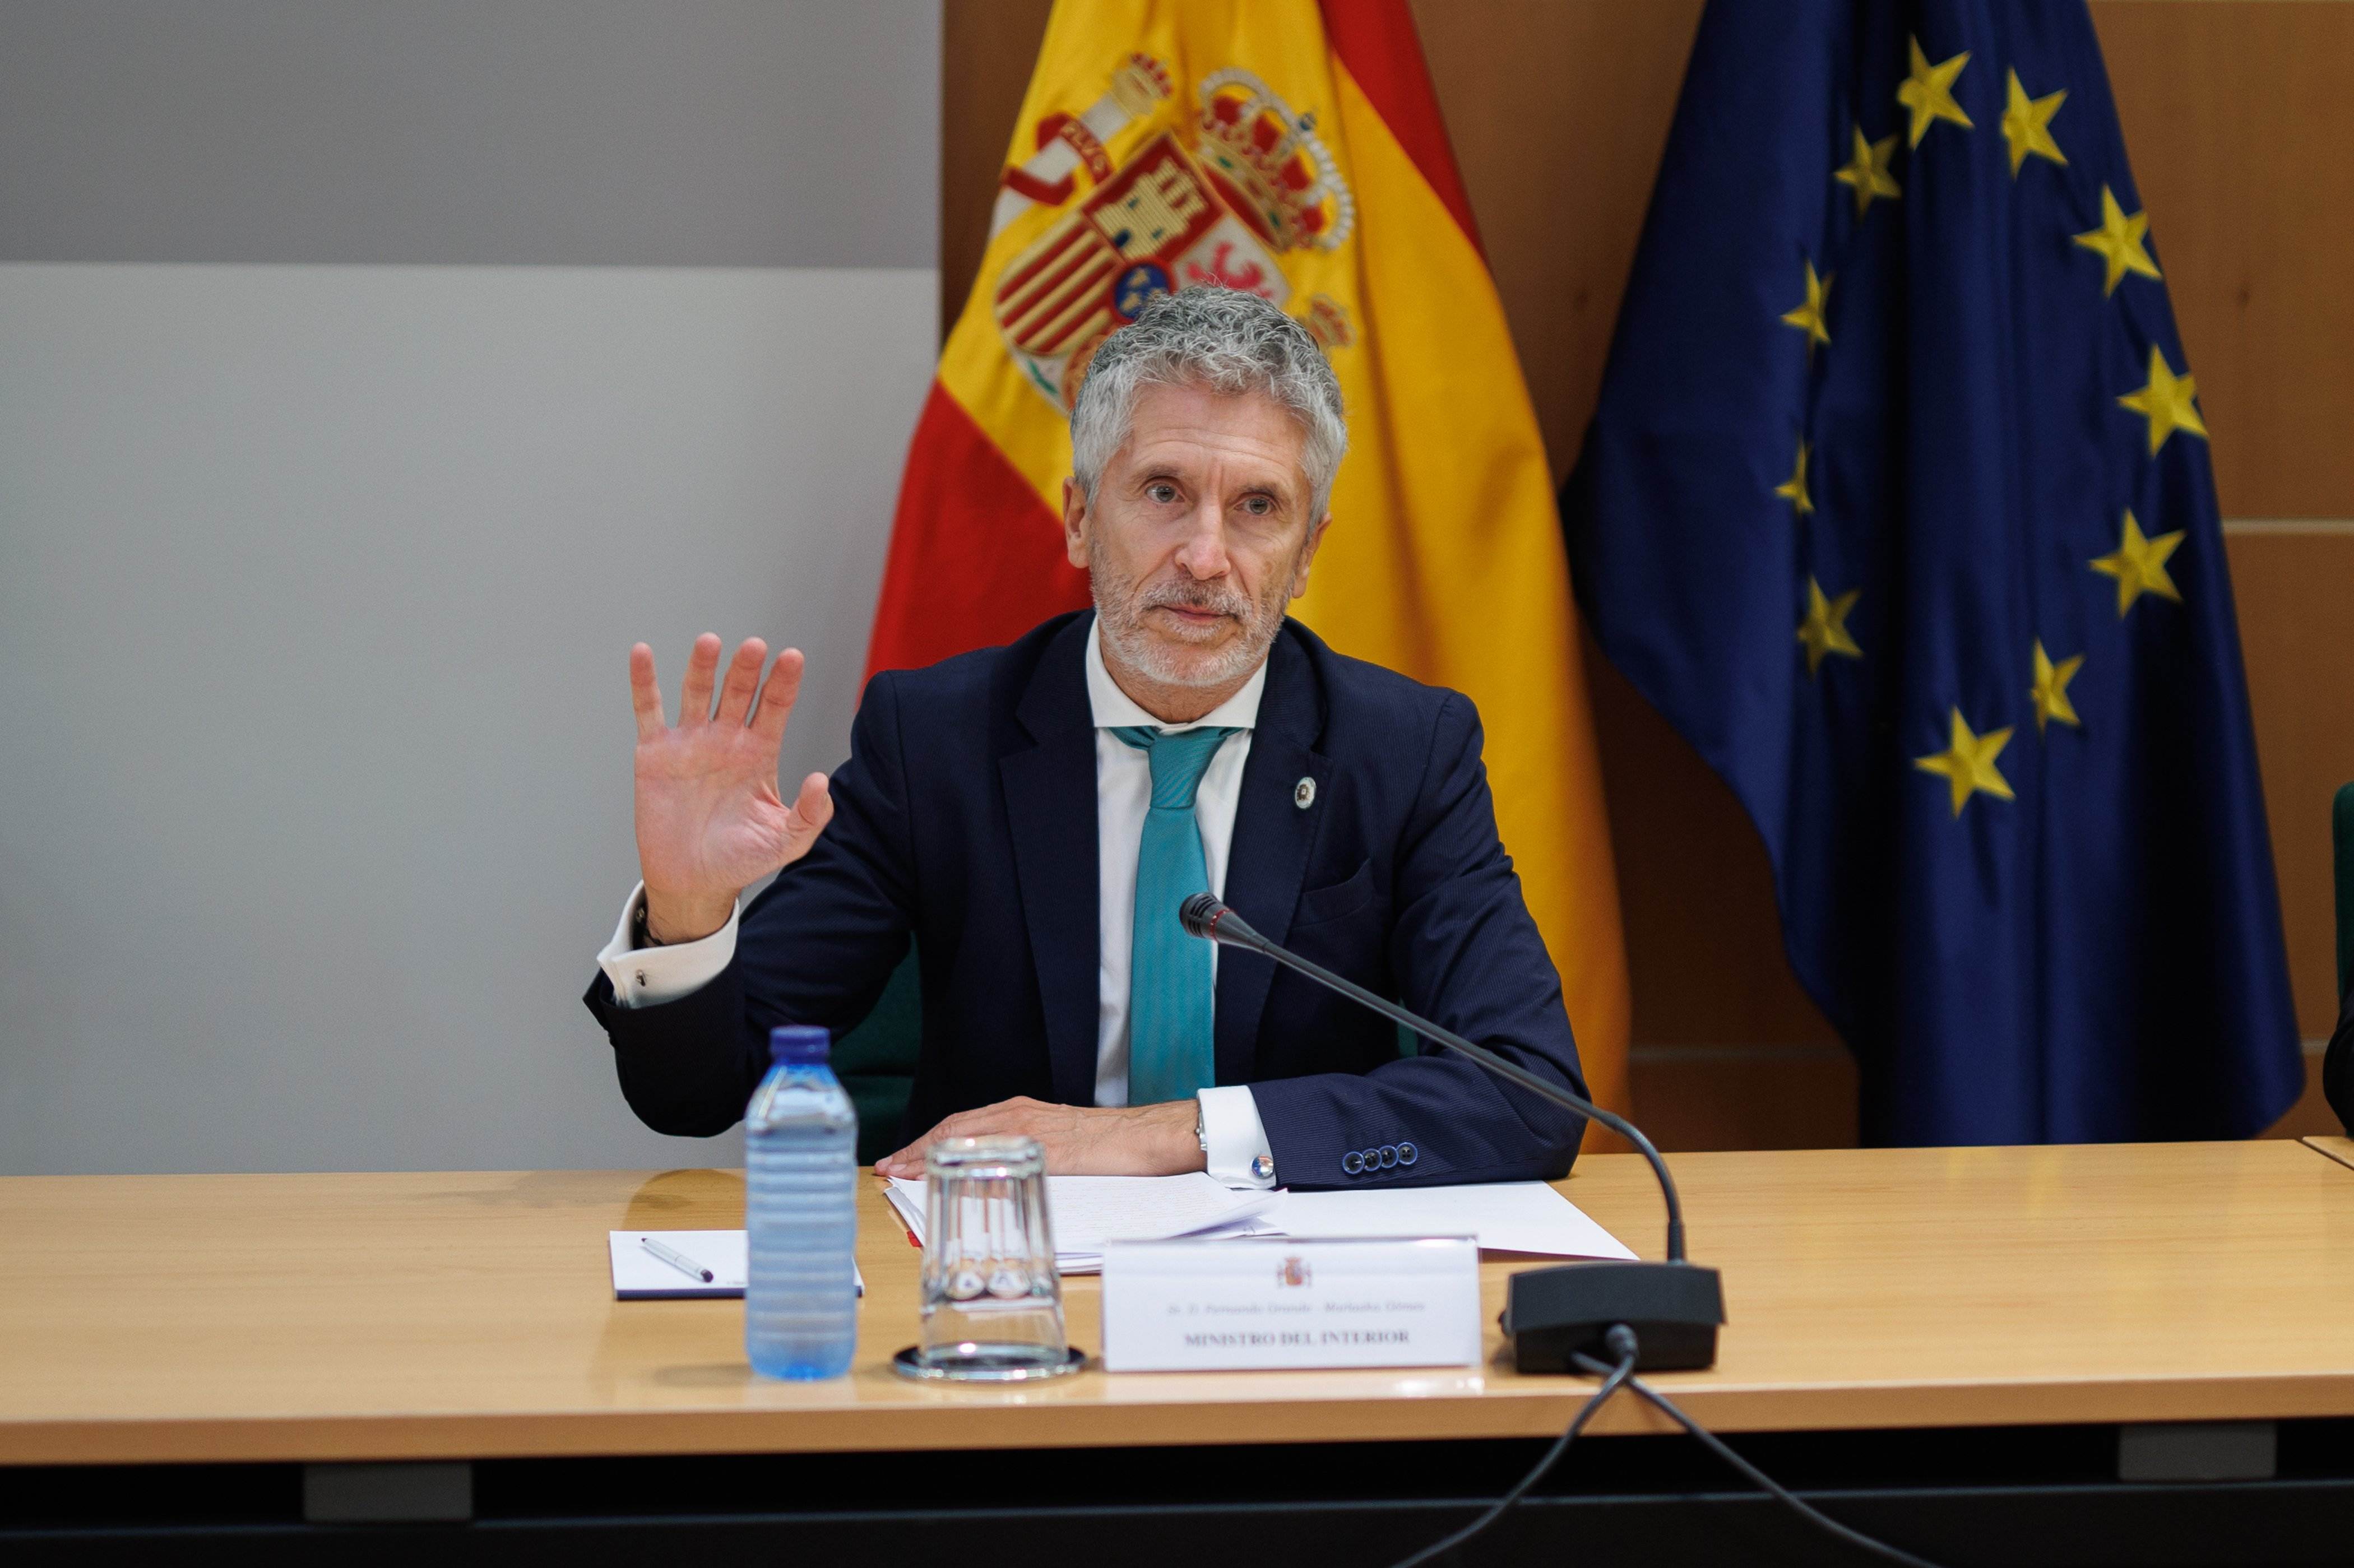 Spanish interior minister warns not to link "irregular immigration" to "terrorist phenomenon"